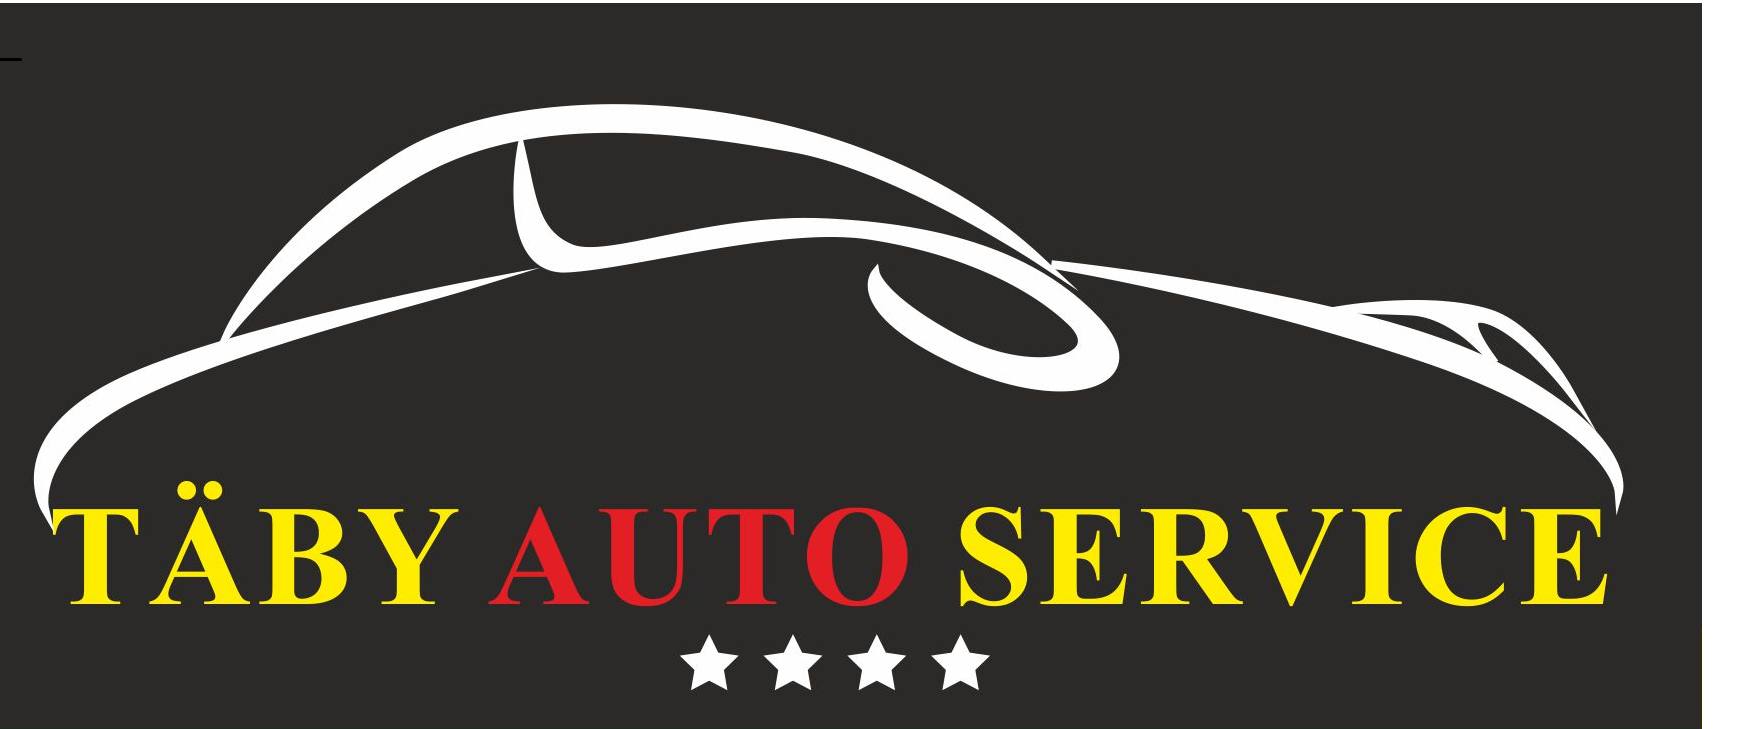 TÄBY Auto Service logo